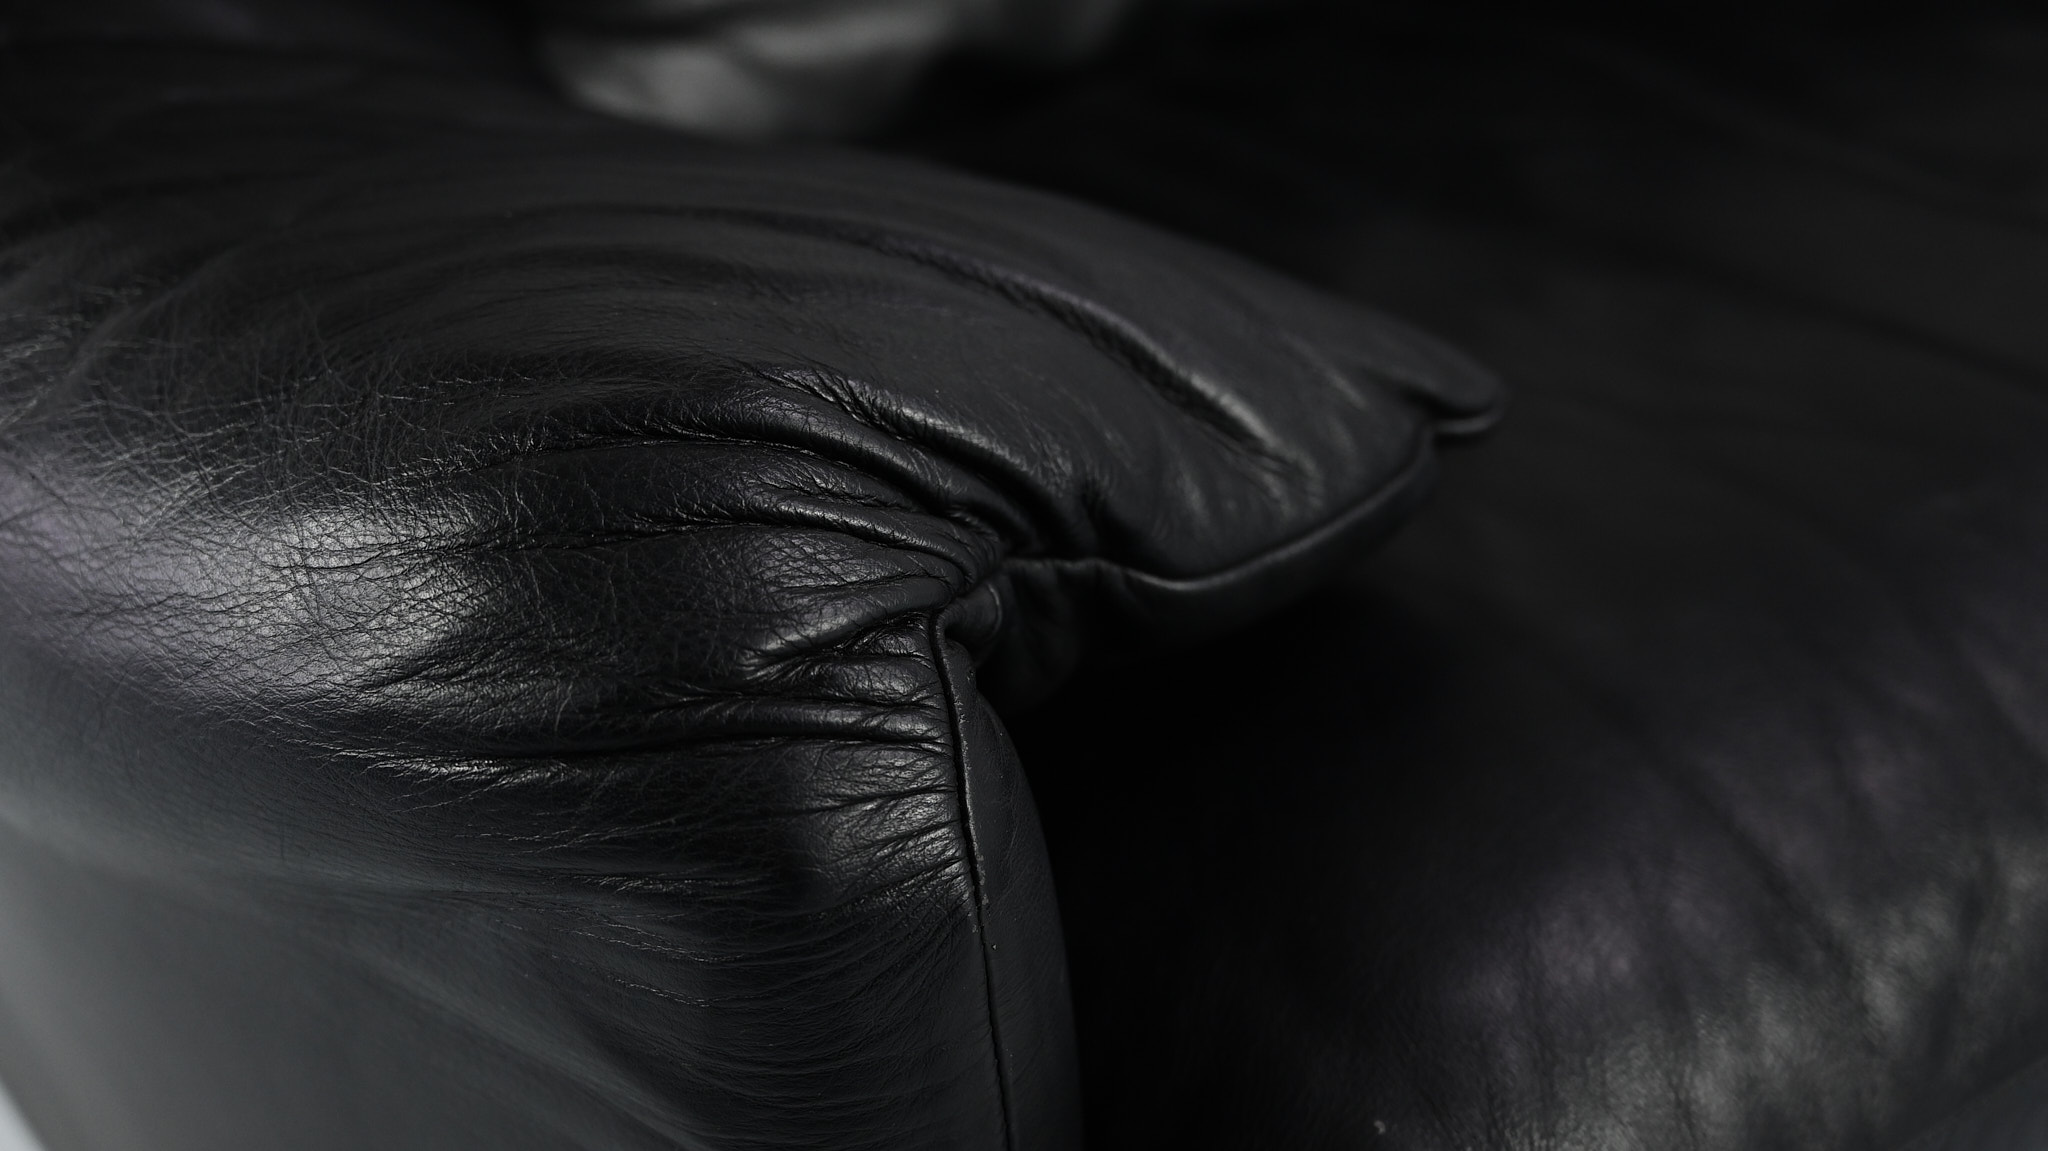 vico magistretti 675 maralunga black leather cuir noir cassina